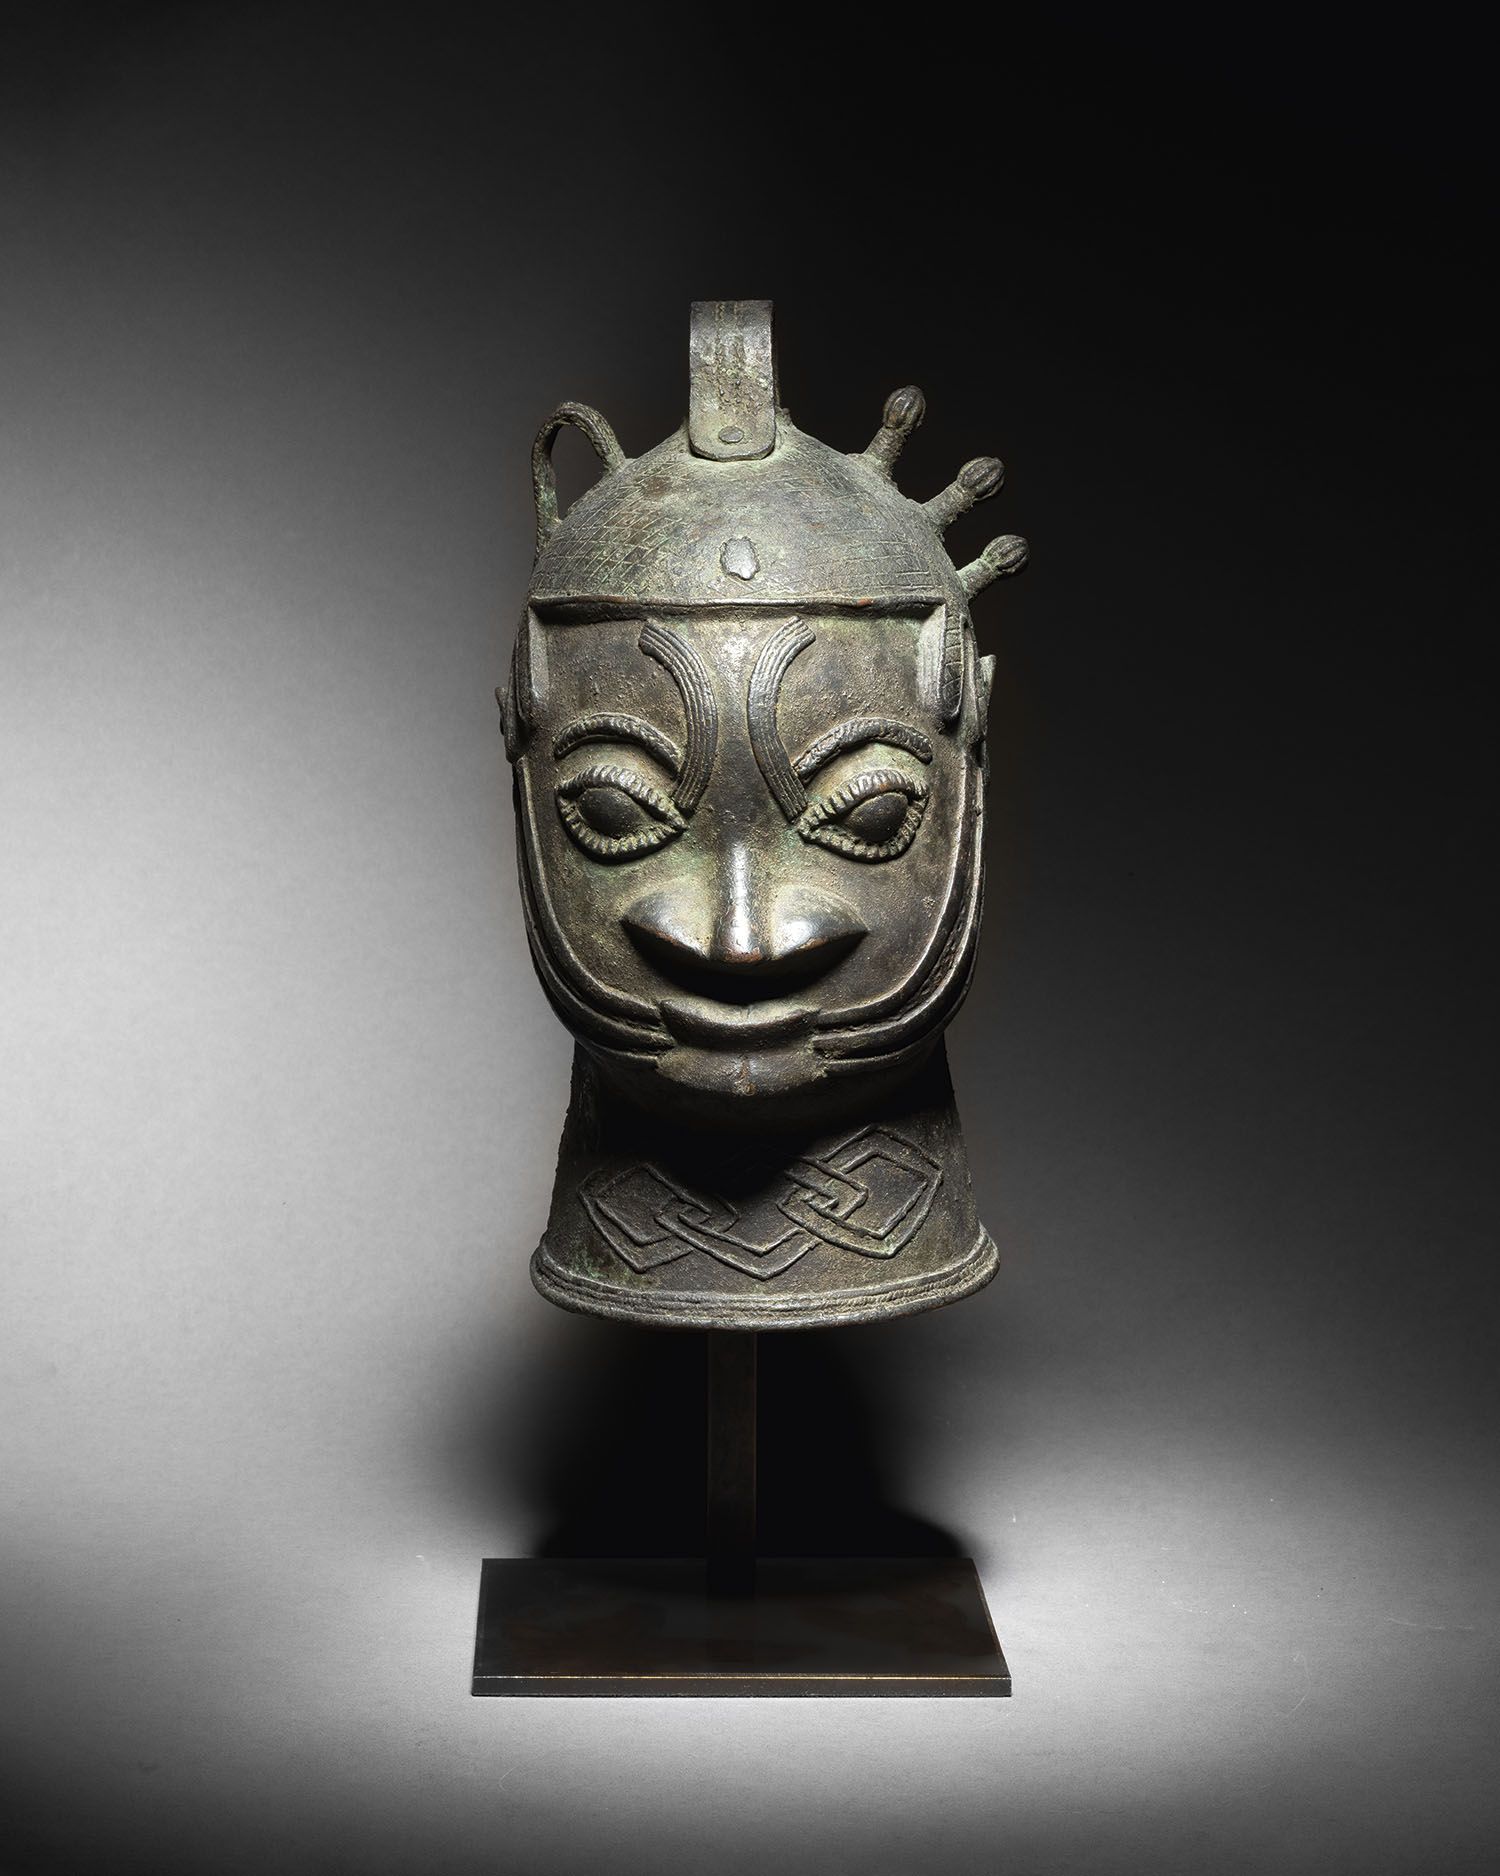 Null Cloche anthropomorphe Owo, Royaume d'Ijebu, Nigéria
Cuivre
H. 24 cm
Anthrop&hellip;